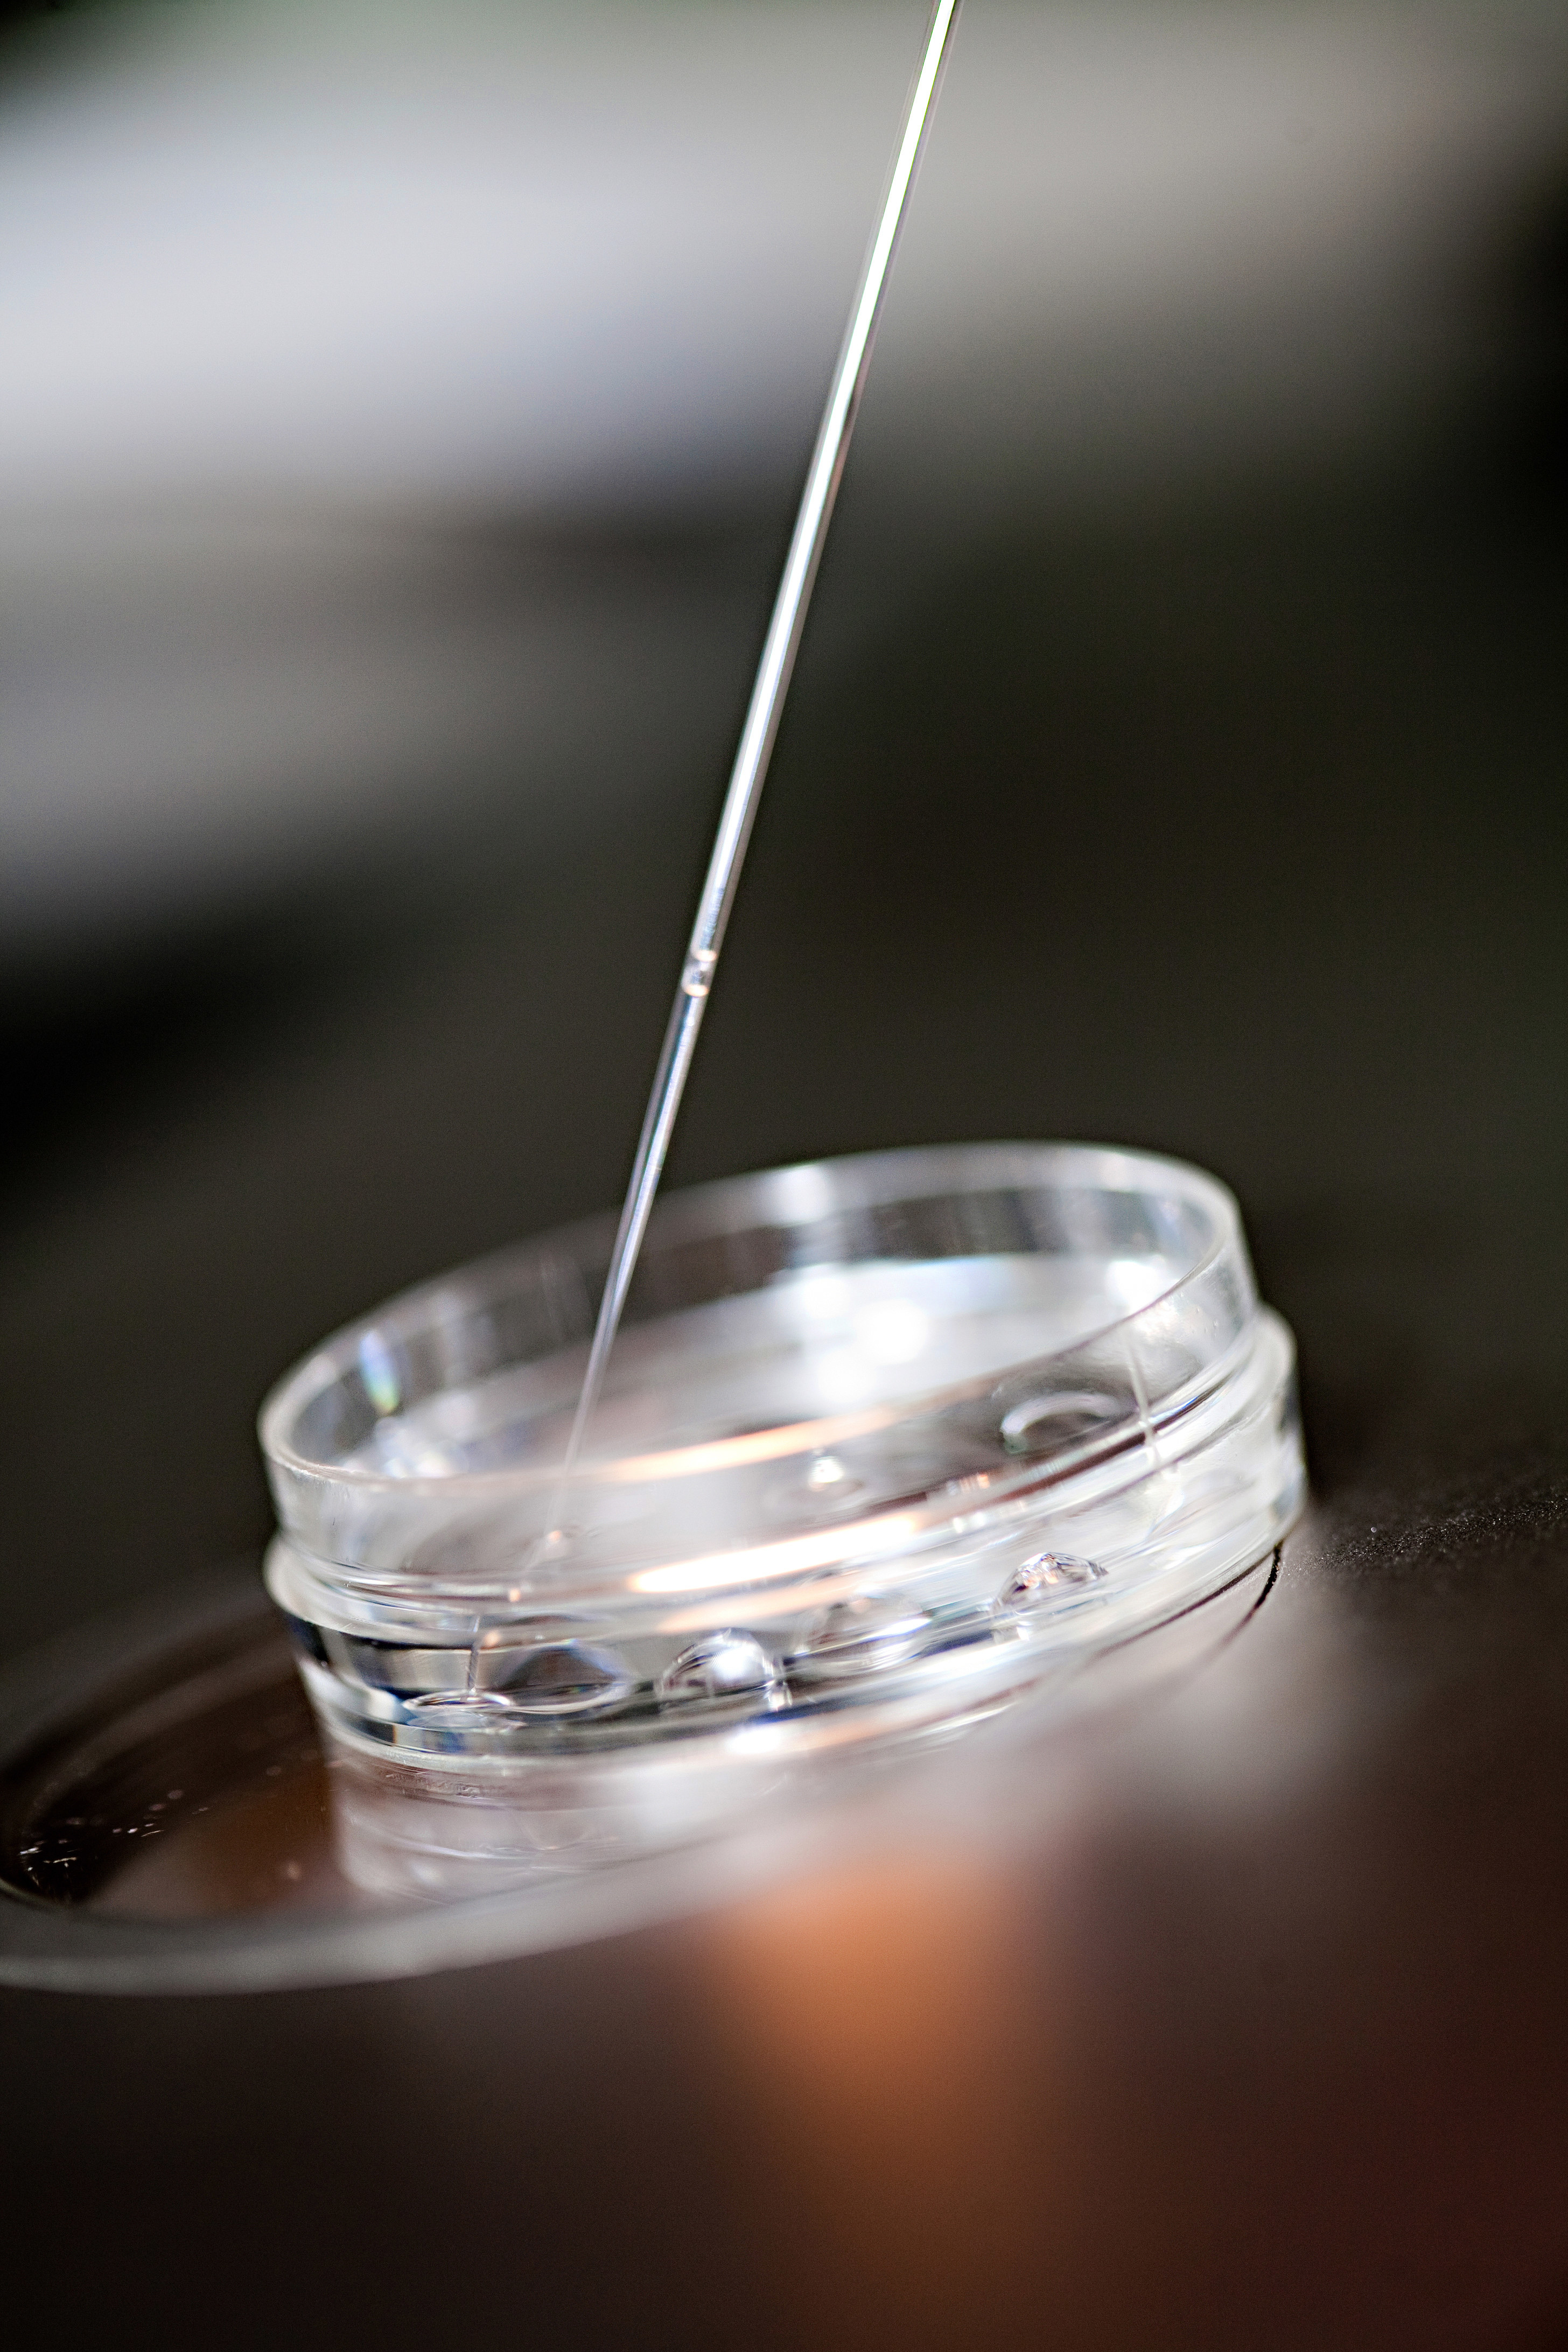 High tech lab equipment used in the in vitro fertilization process